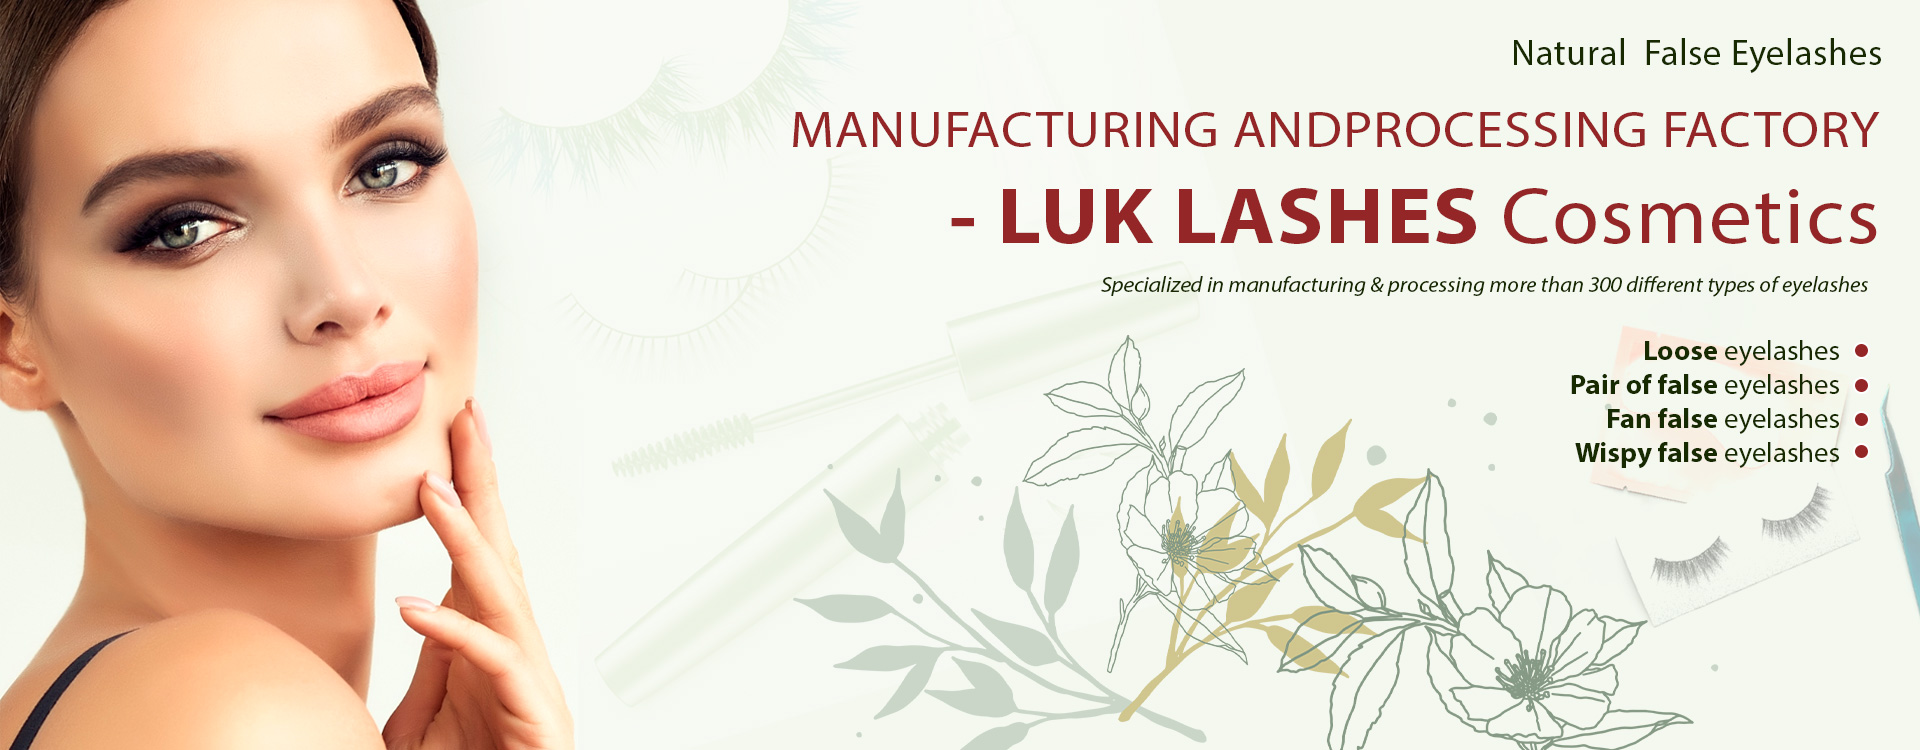 Luk Lashes Co., Ltd